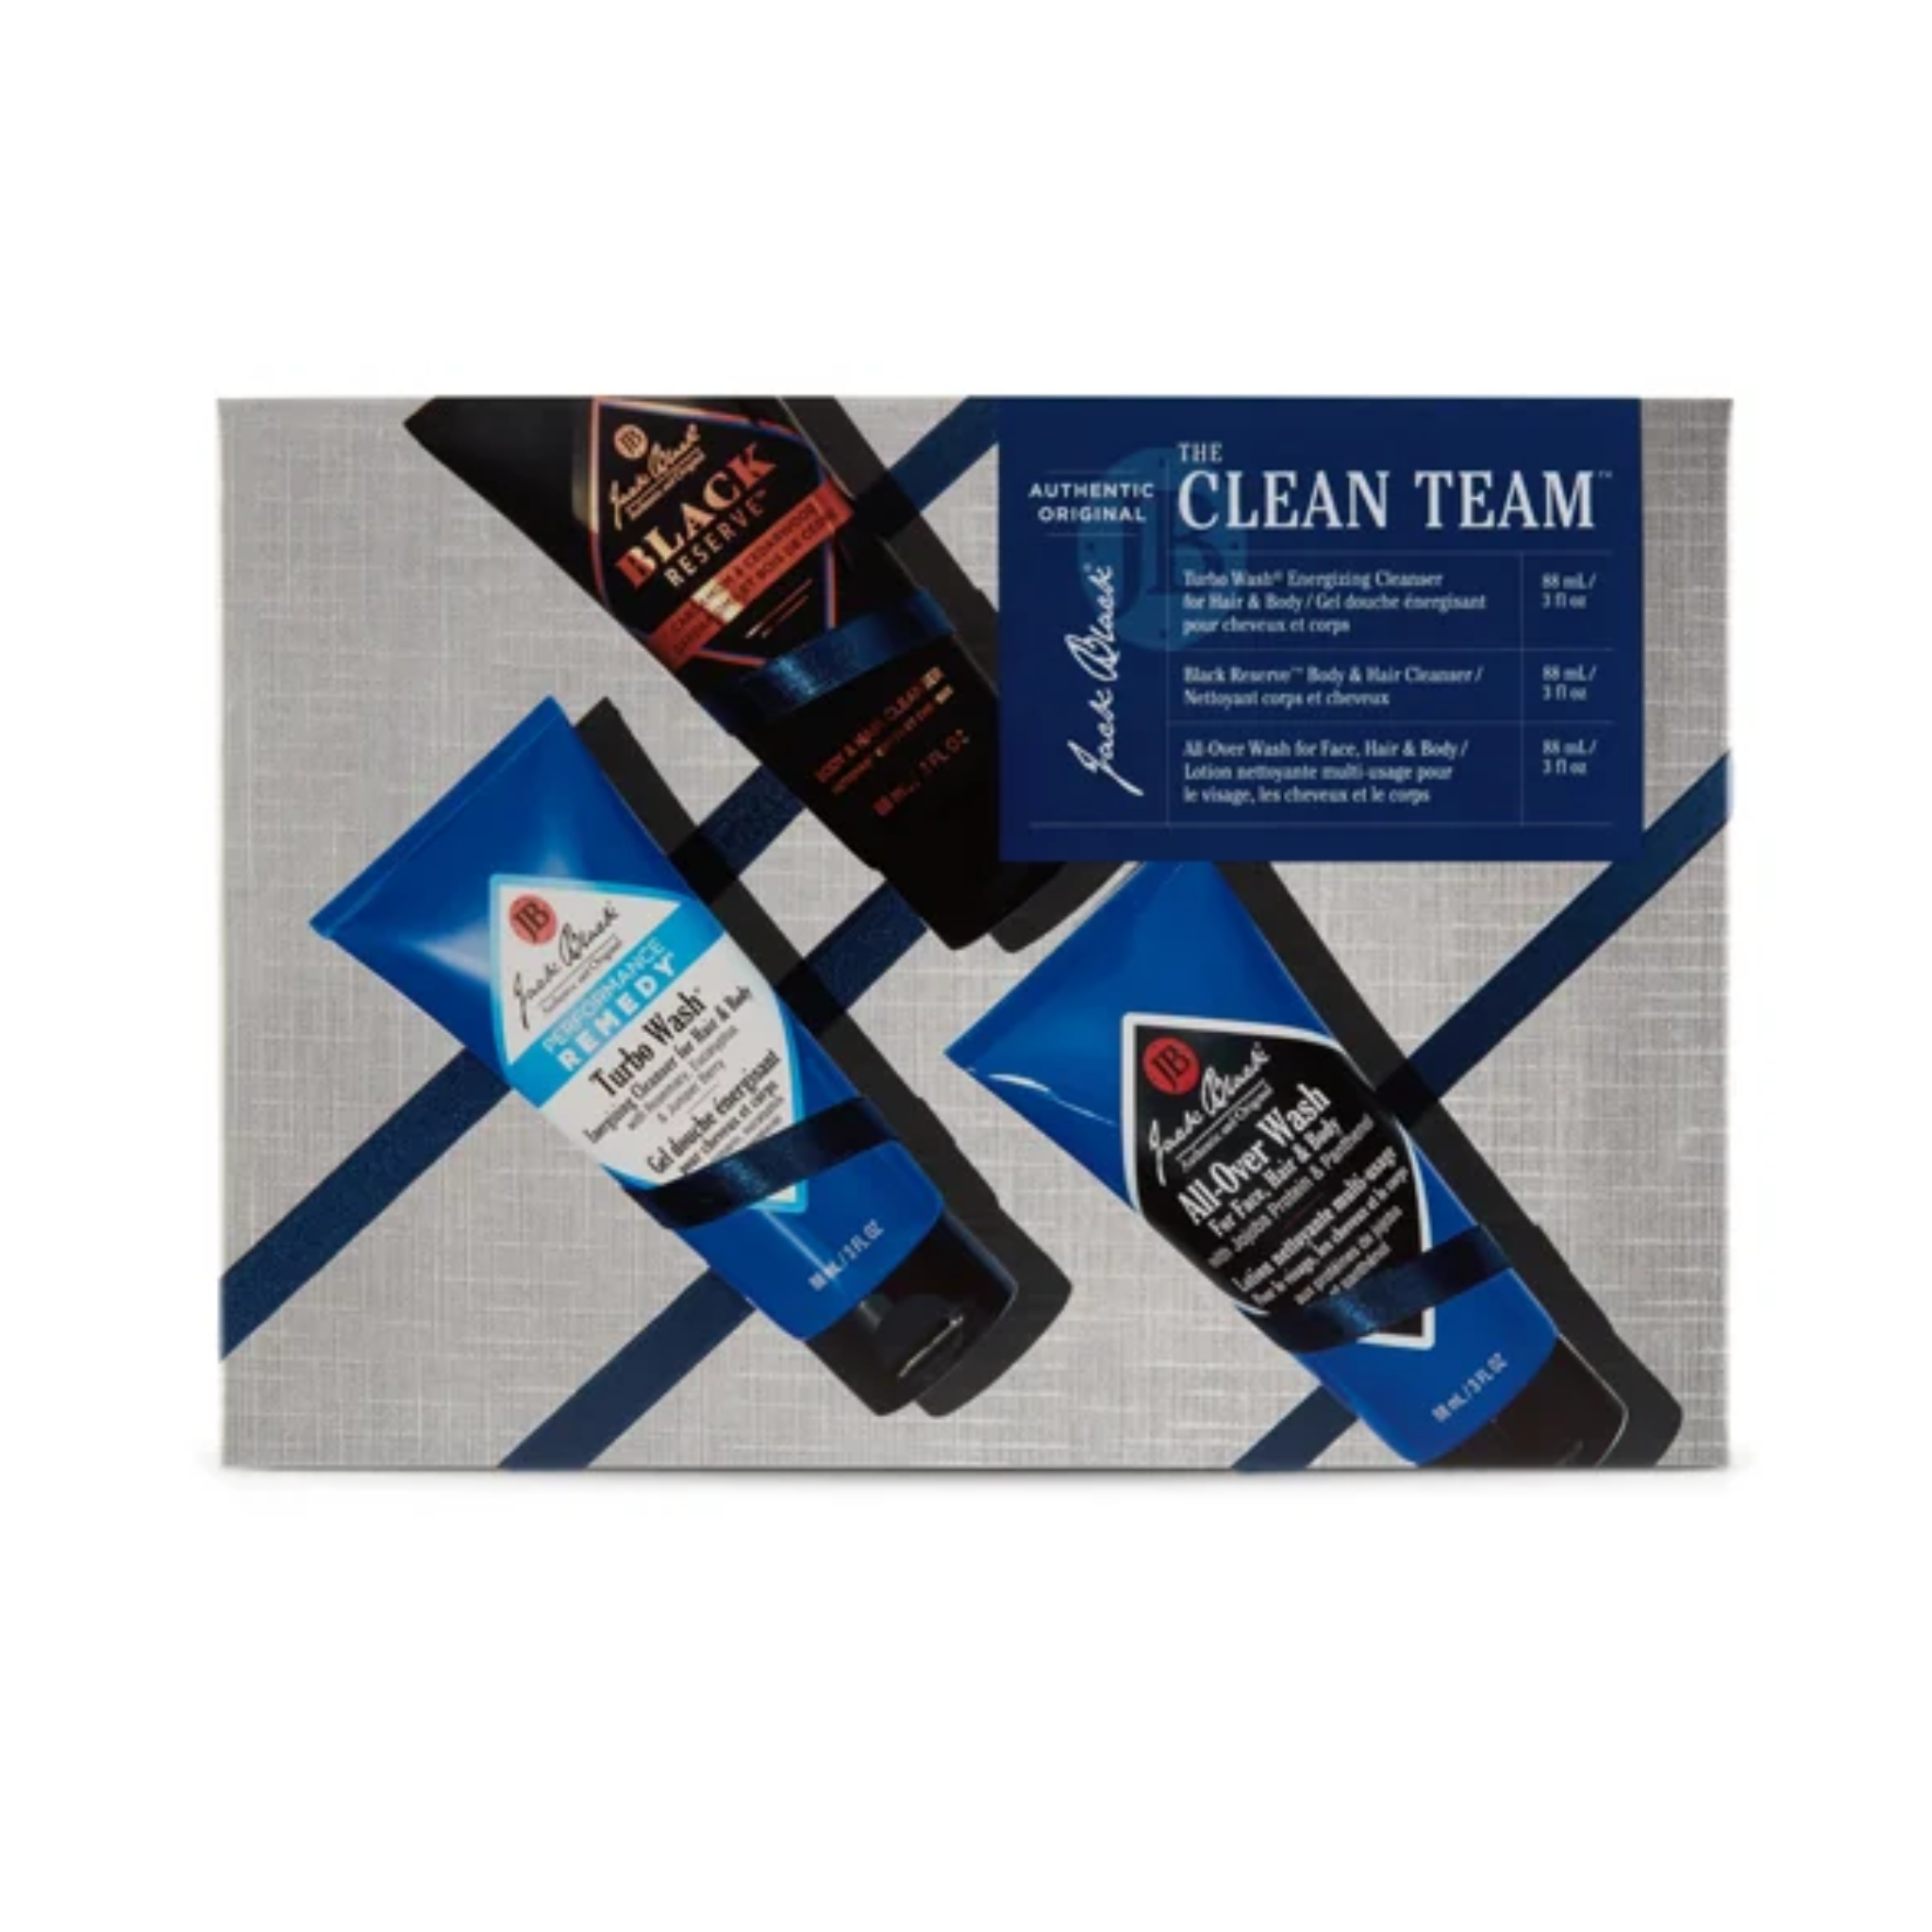 The Clean Team Kit